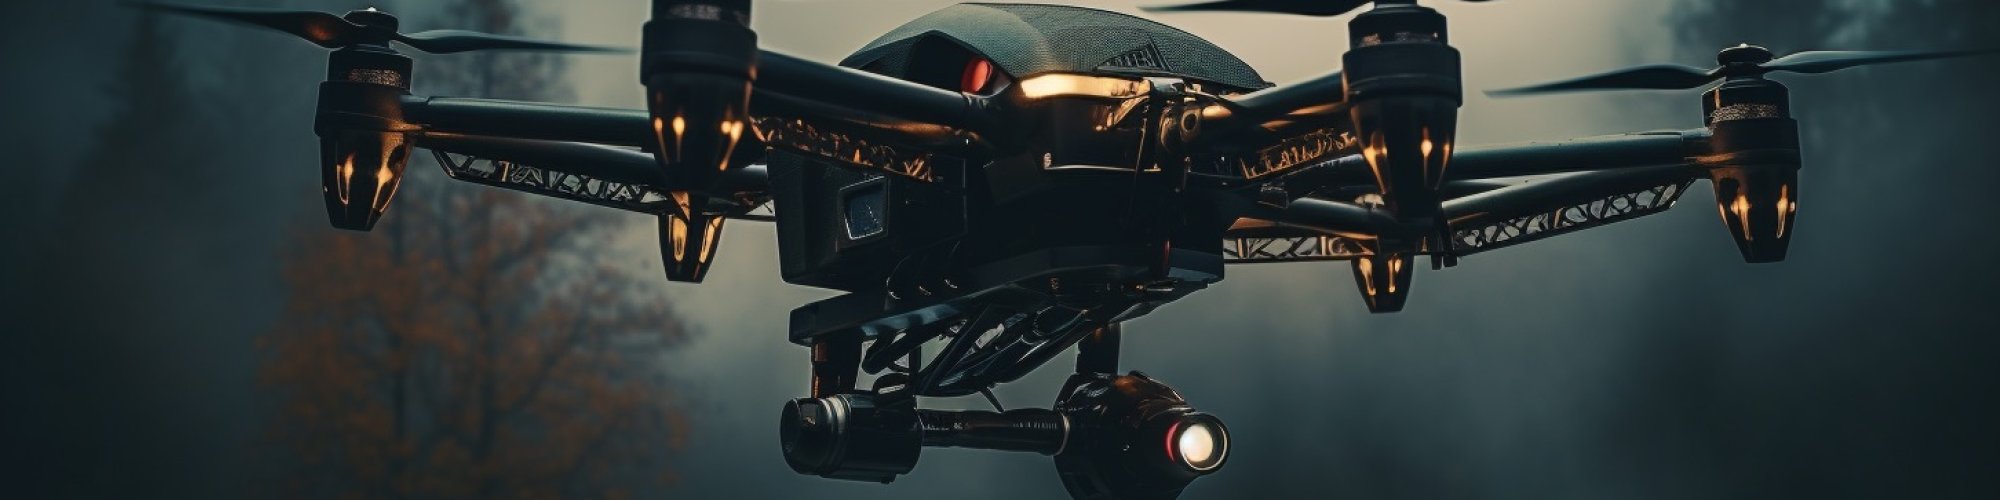 Black Falcon Drone Reviews: What is The Best Surveillance Drone?